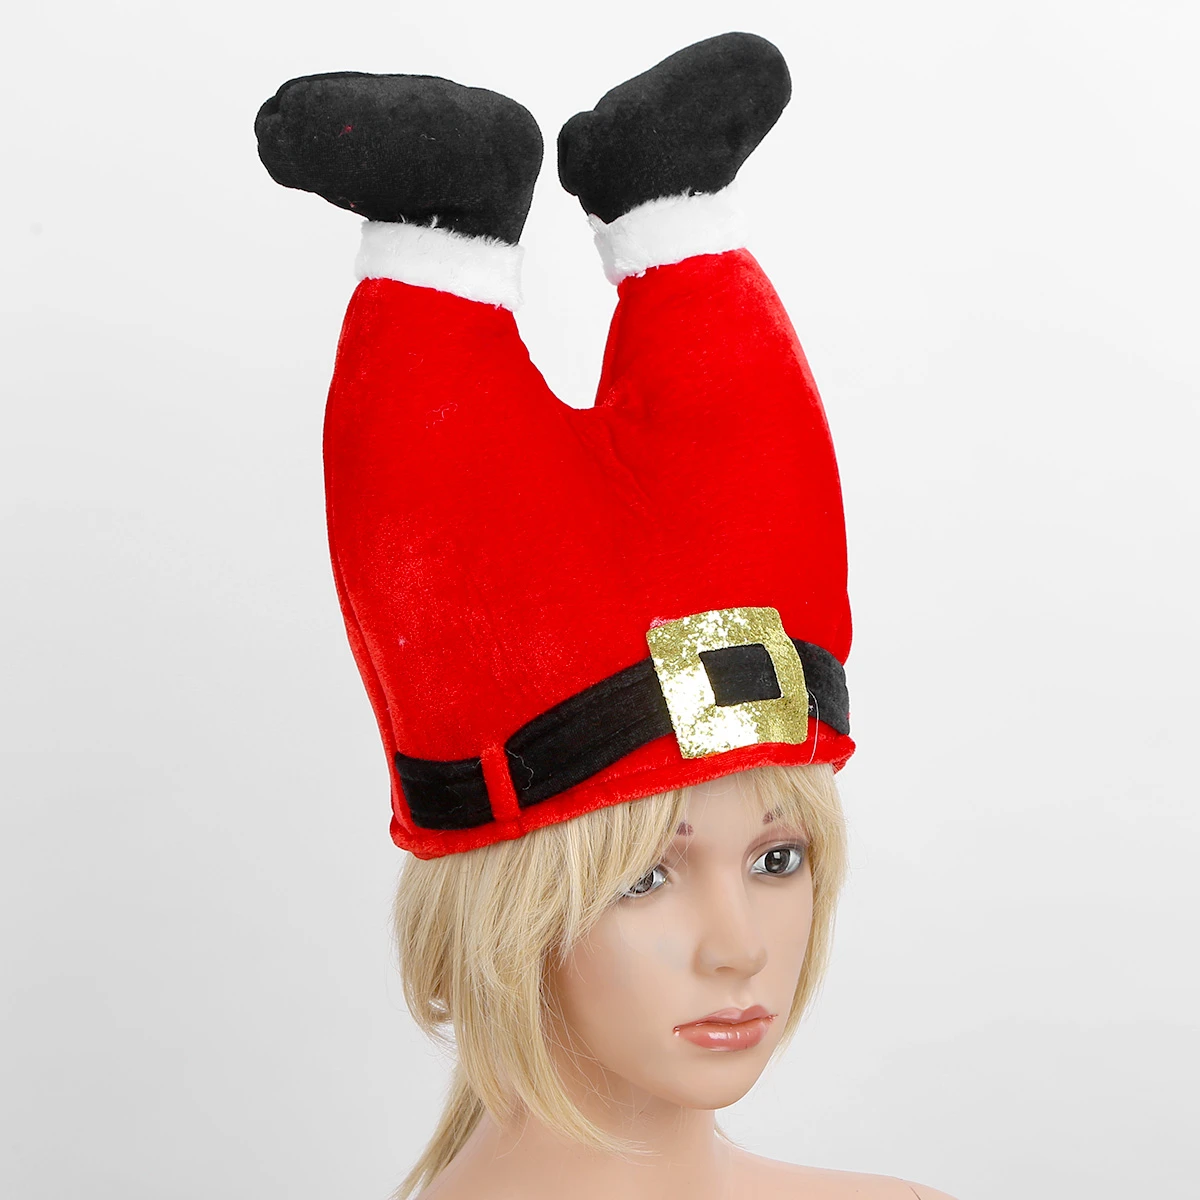 Novelty Christmas Hats Santa Claus Clown Pants Christmas Party Amusement Park Clown Costume Hat Props Kids Funny Toys|Christmas Hats| AliExpress